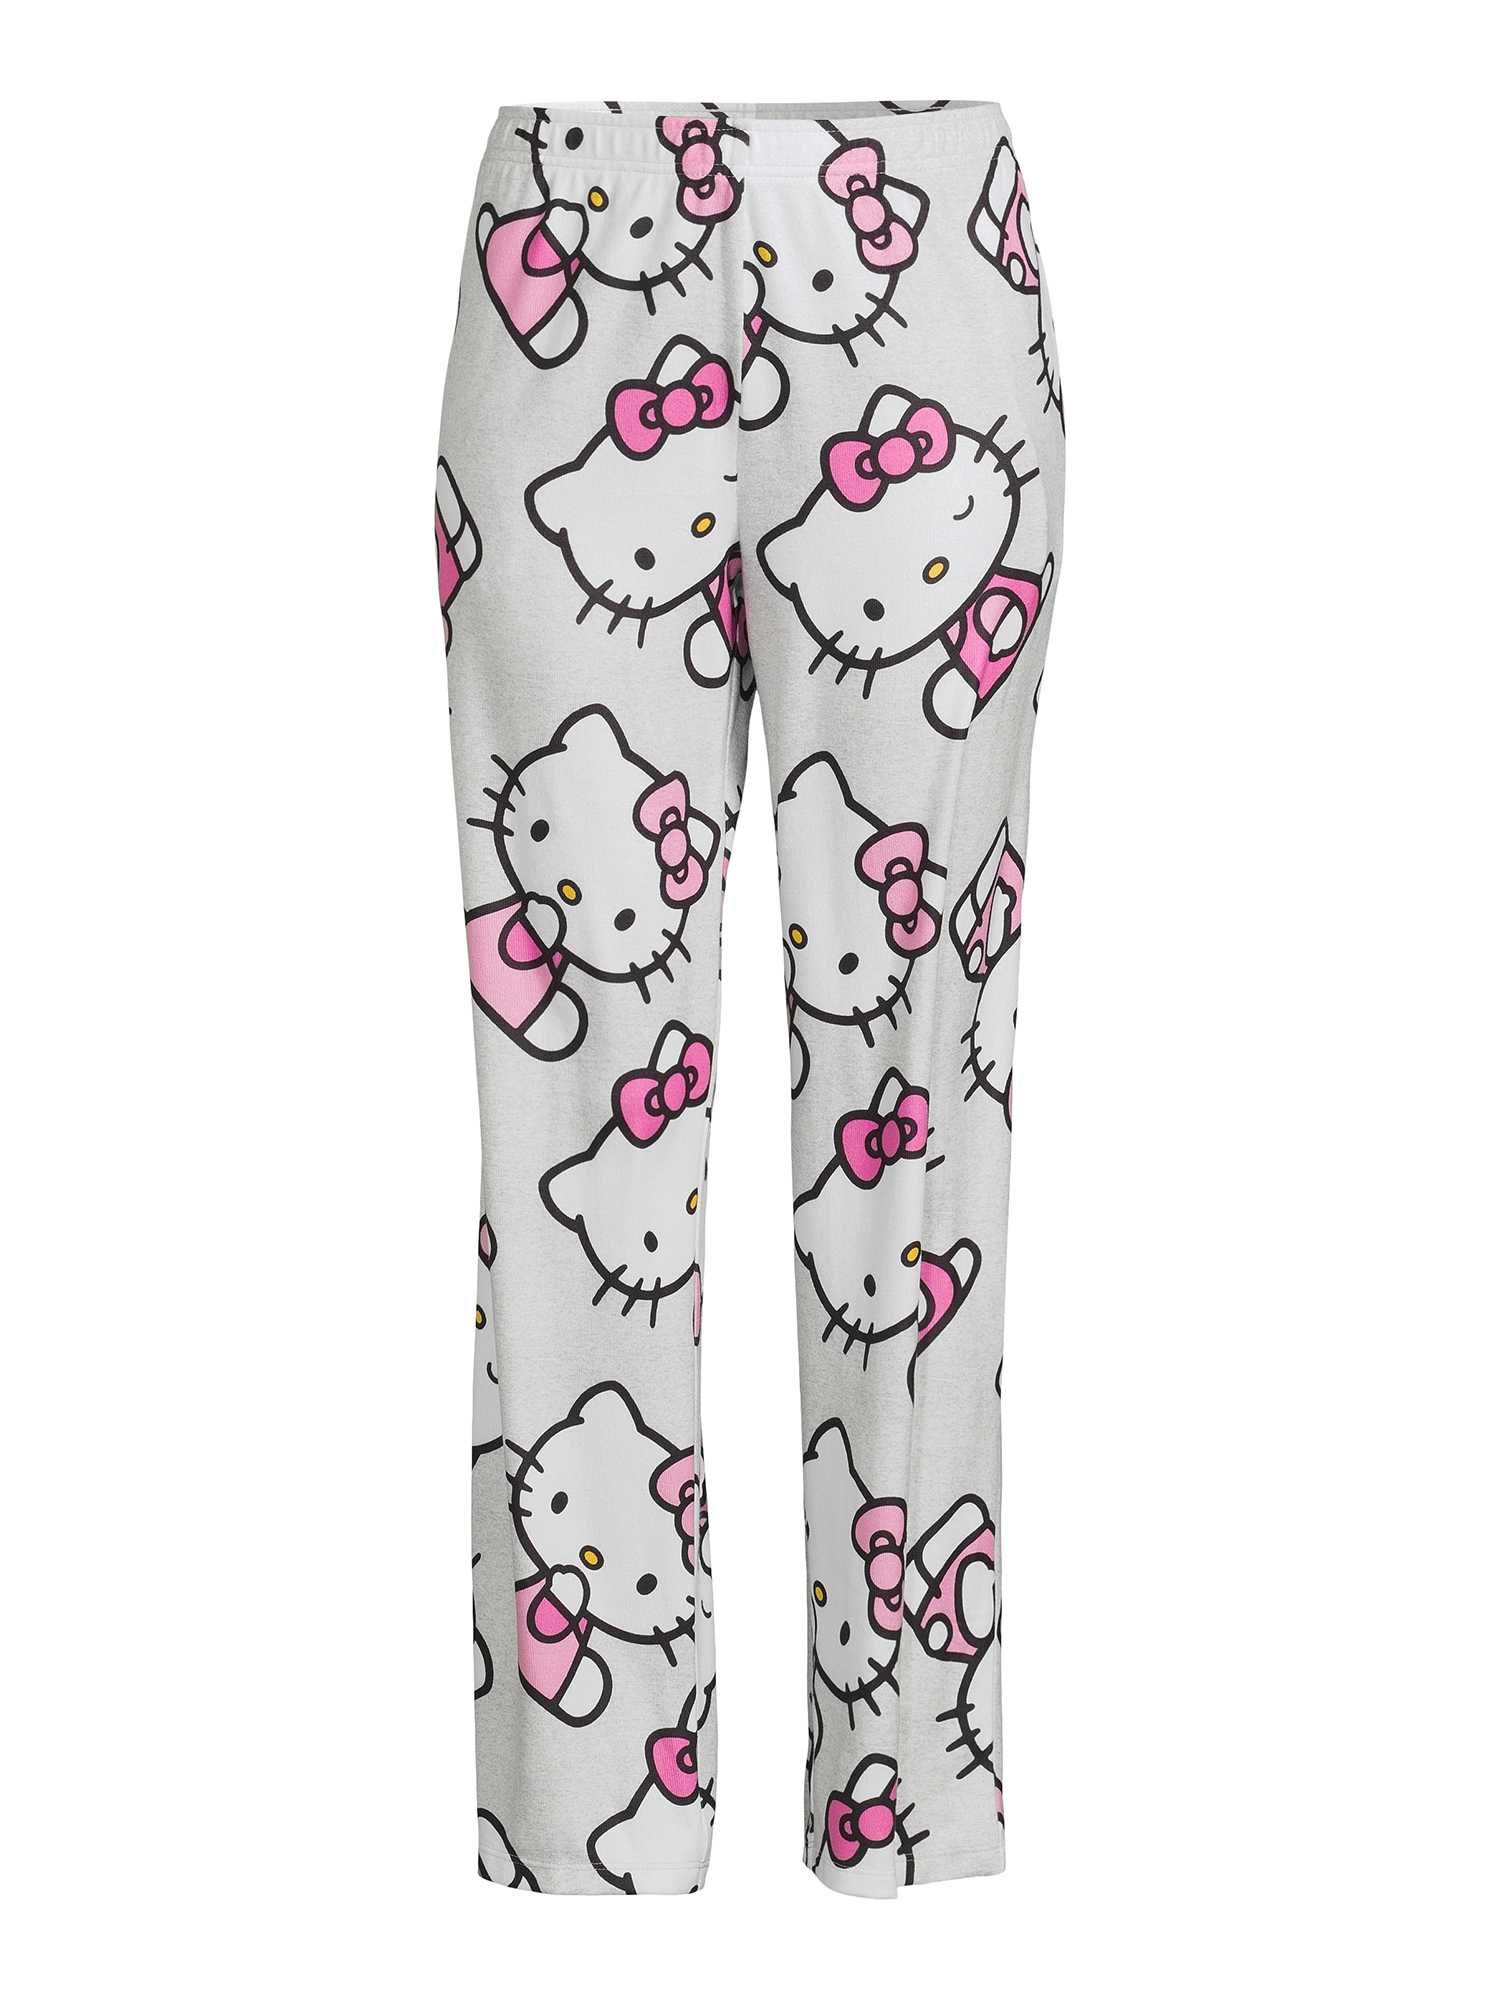 Hello Kitty Print Lounge Pants, Size XS-3X - image 5 of 5